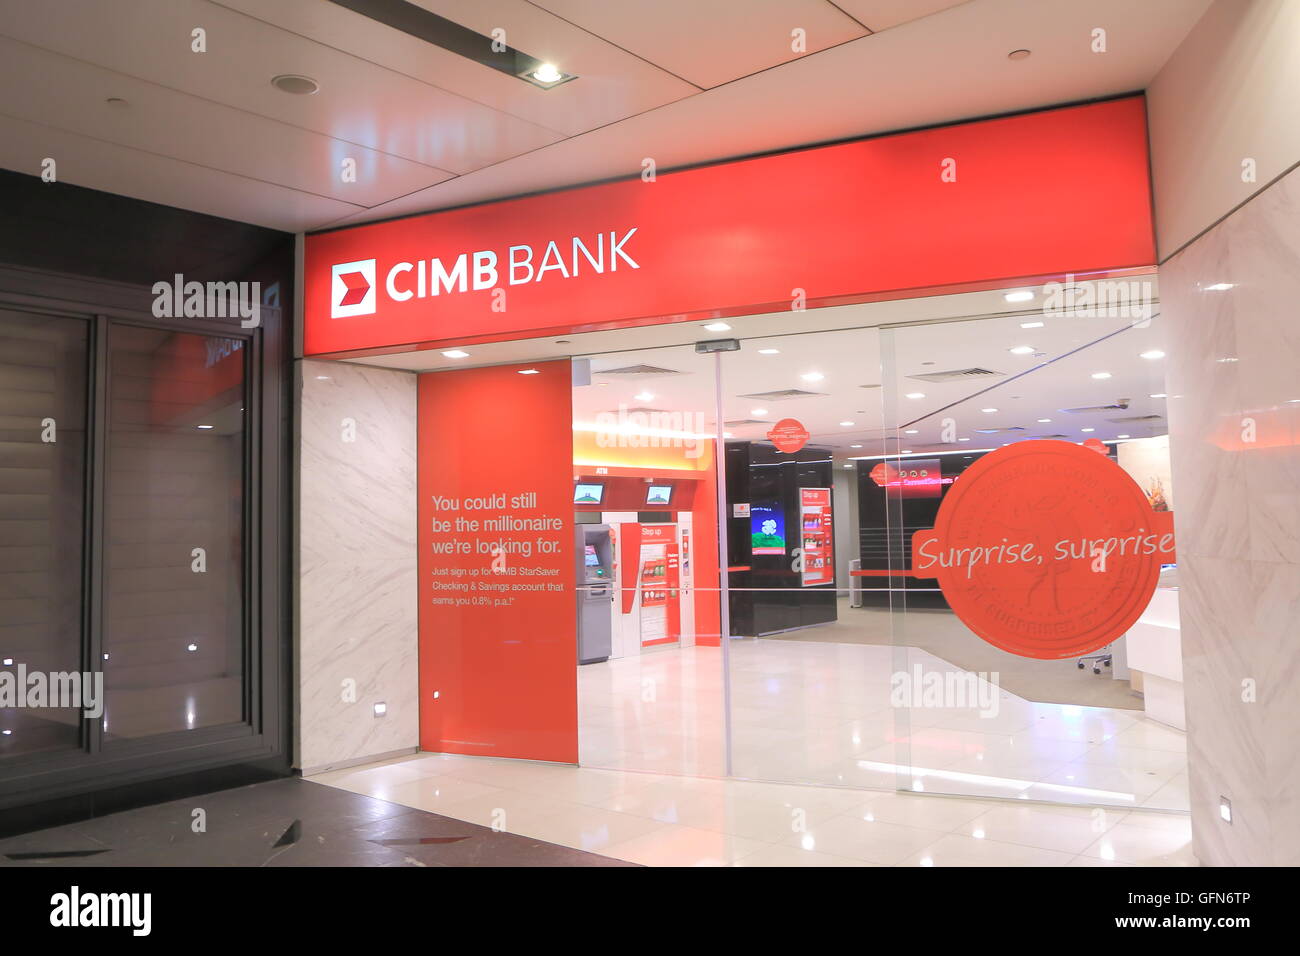 Cimbbank ‎CIMB Bank